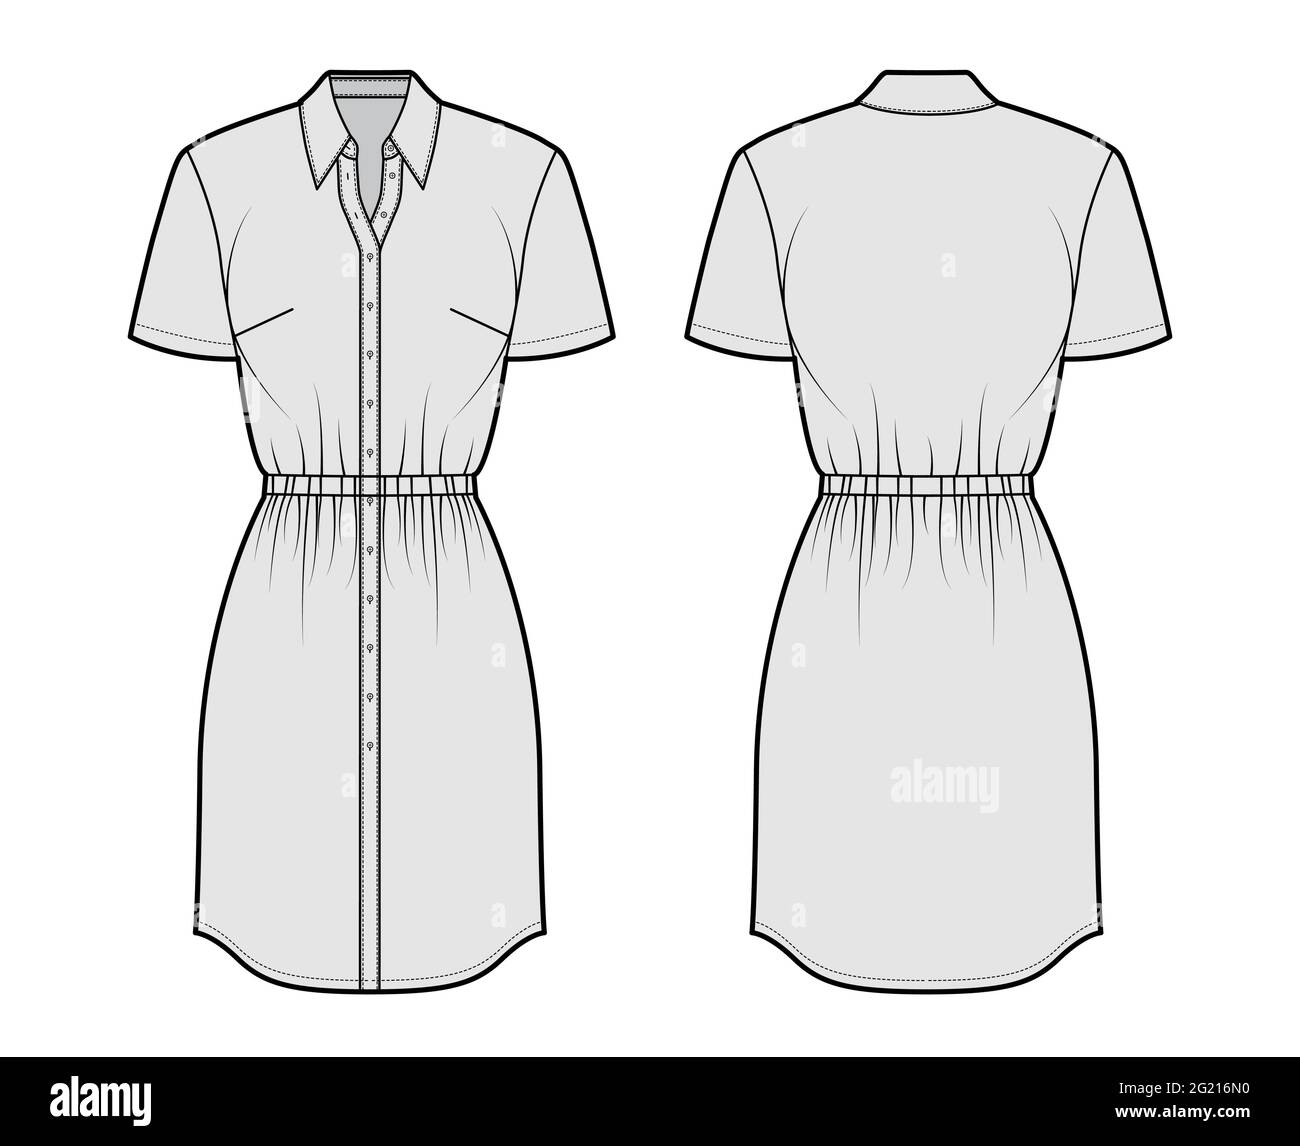 Dress shirt technical fashion illustration with gathered waist, short ...